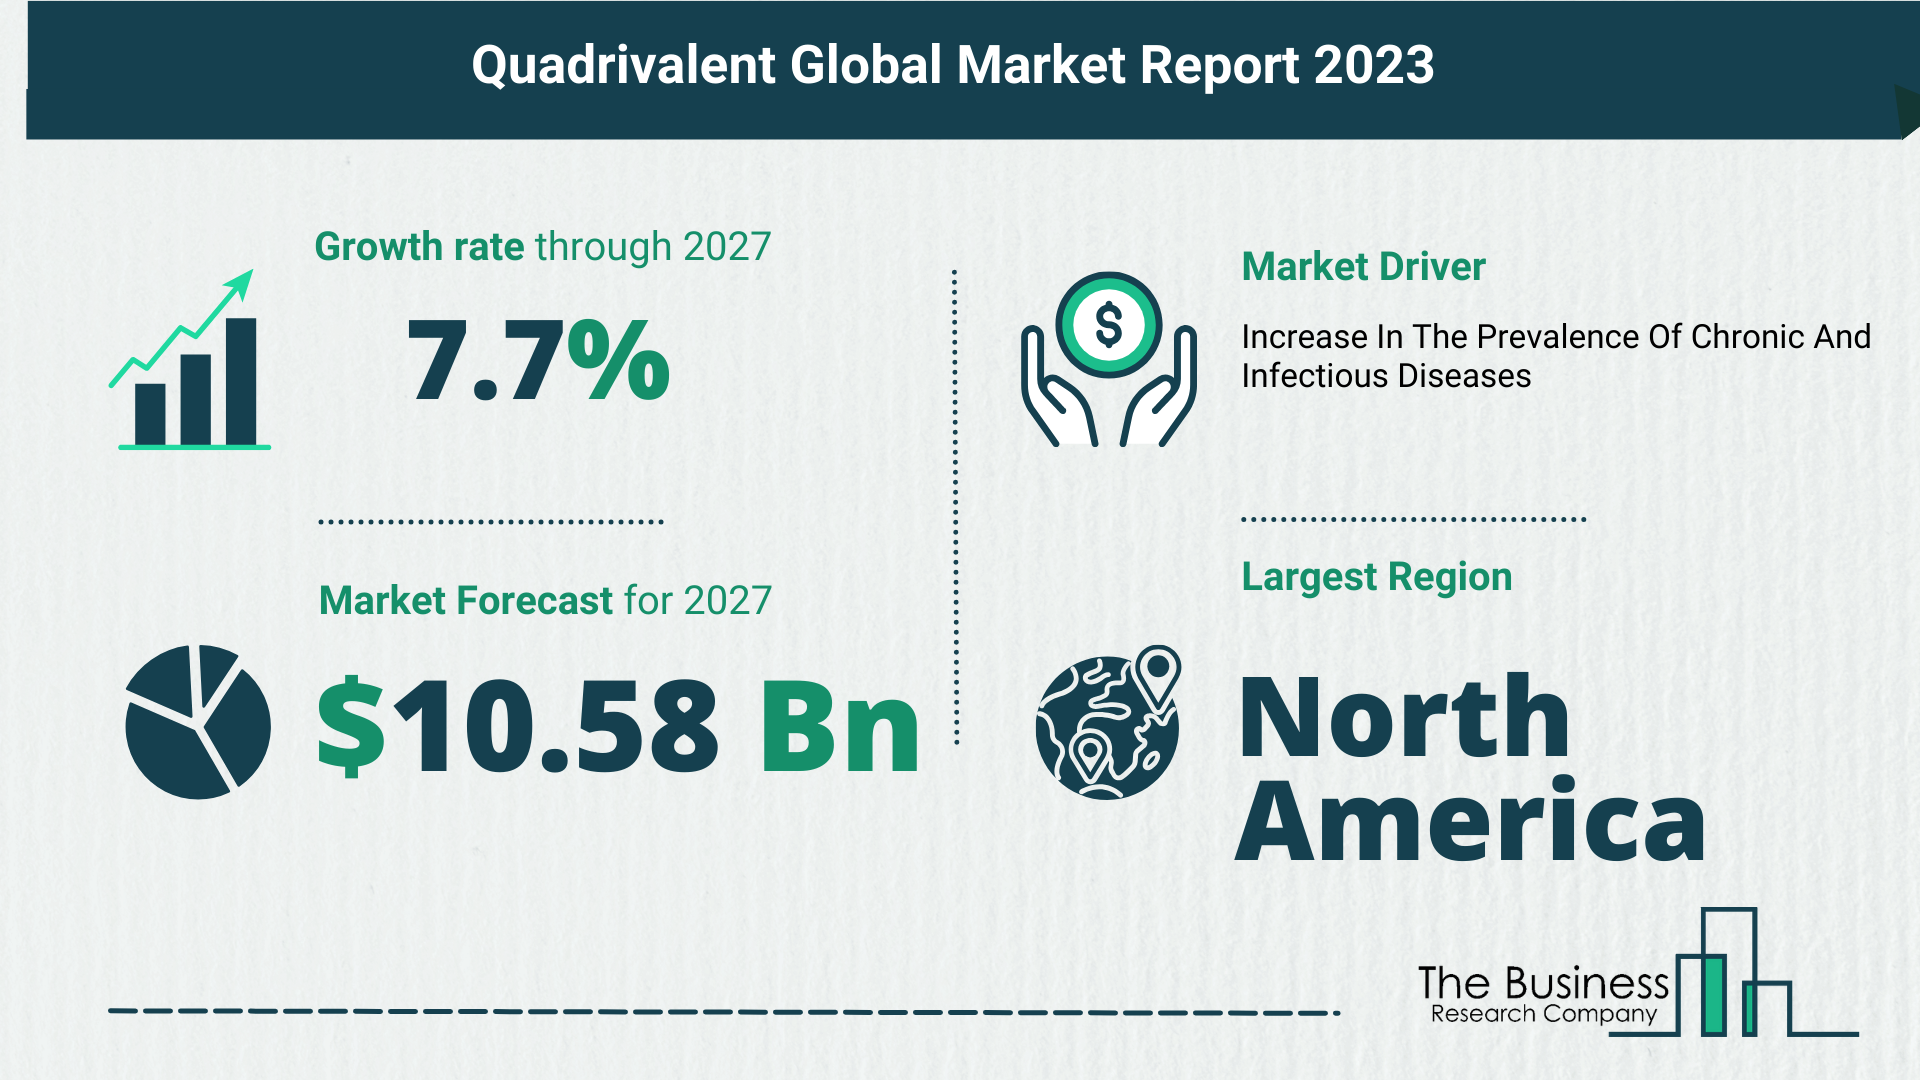 Global Quadrivalent Market